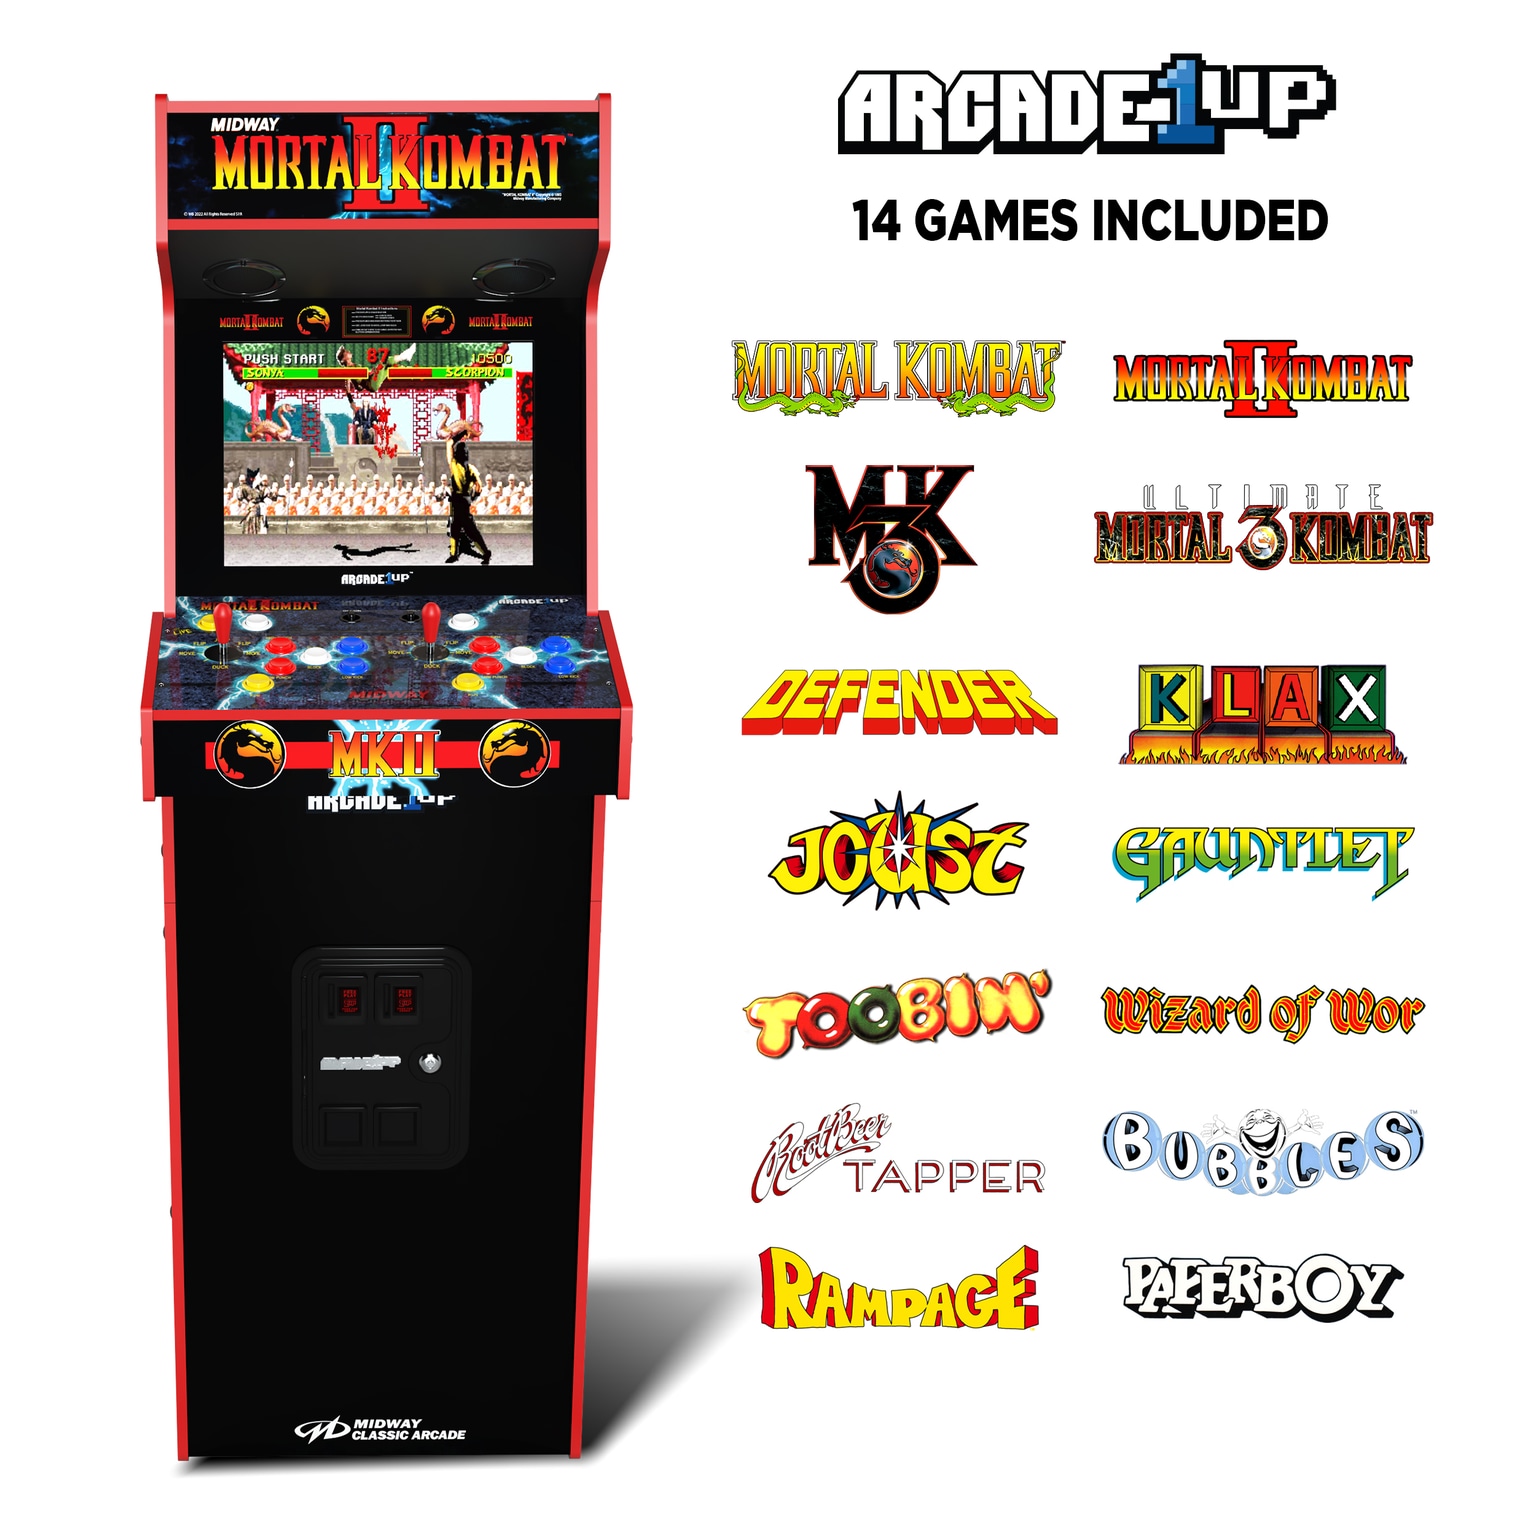 Arcade1up Mortal Kombat II Deluxe Arcade Game | P.C. Richard & Son